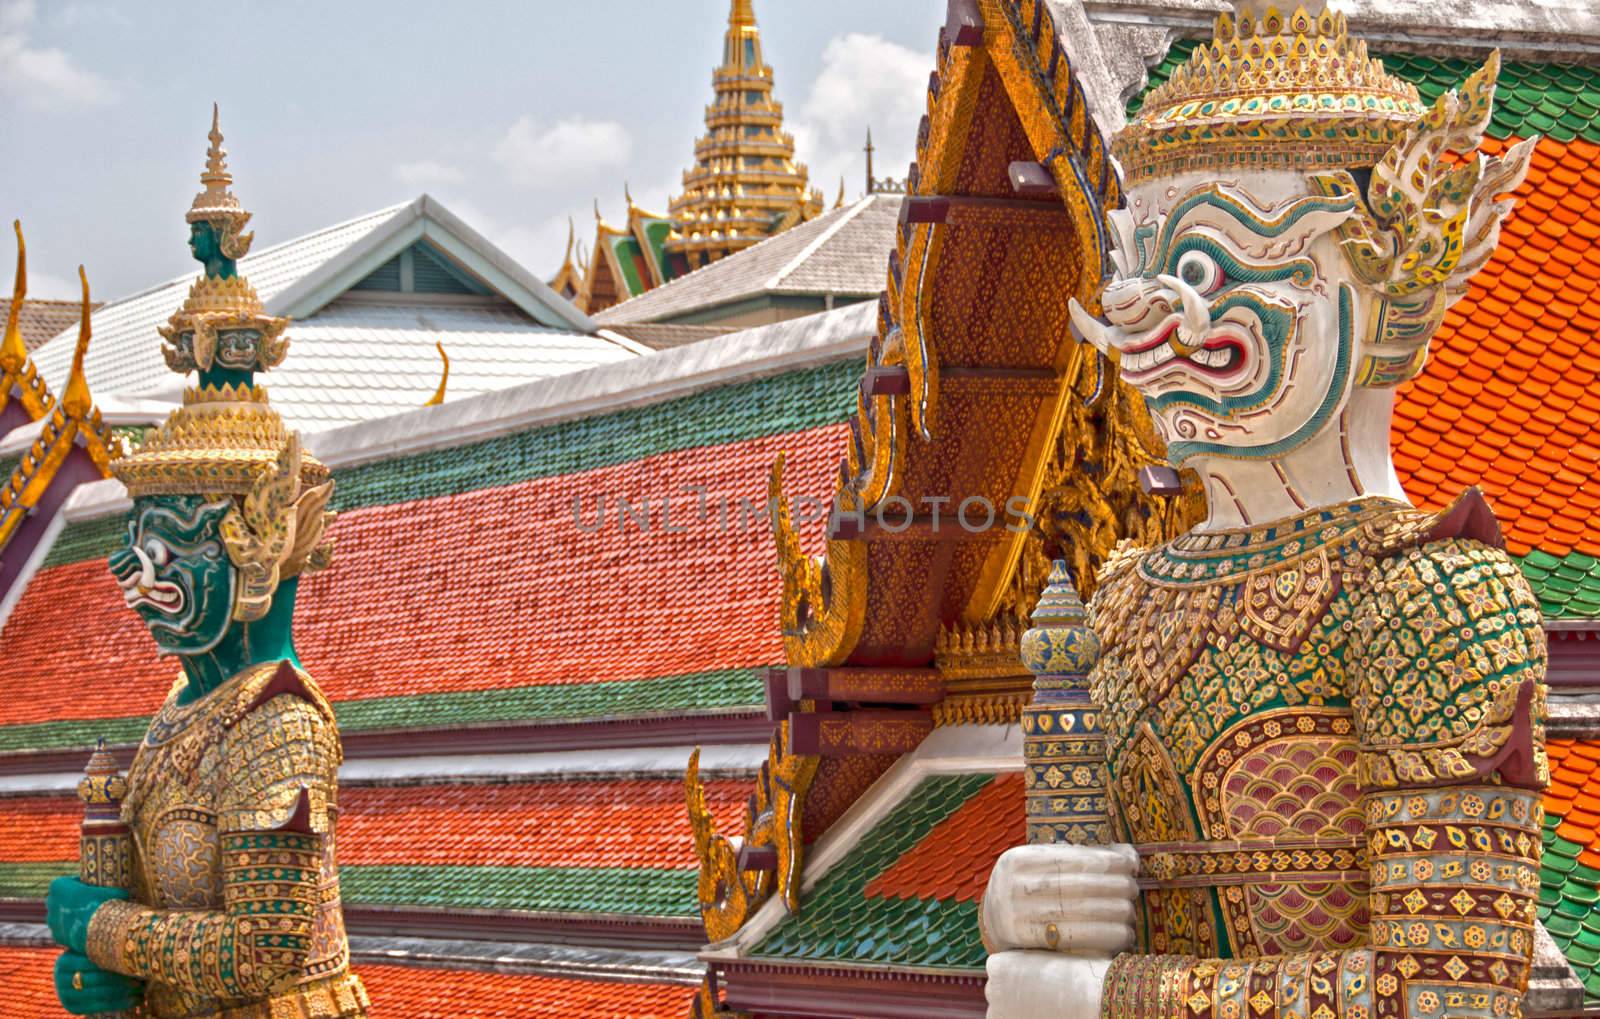 Statues inside the Grand Palace, Bangkok, Thailand